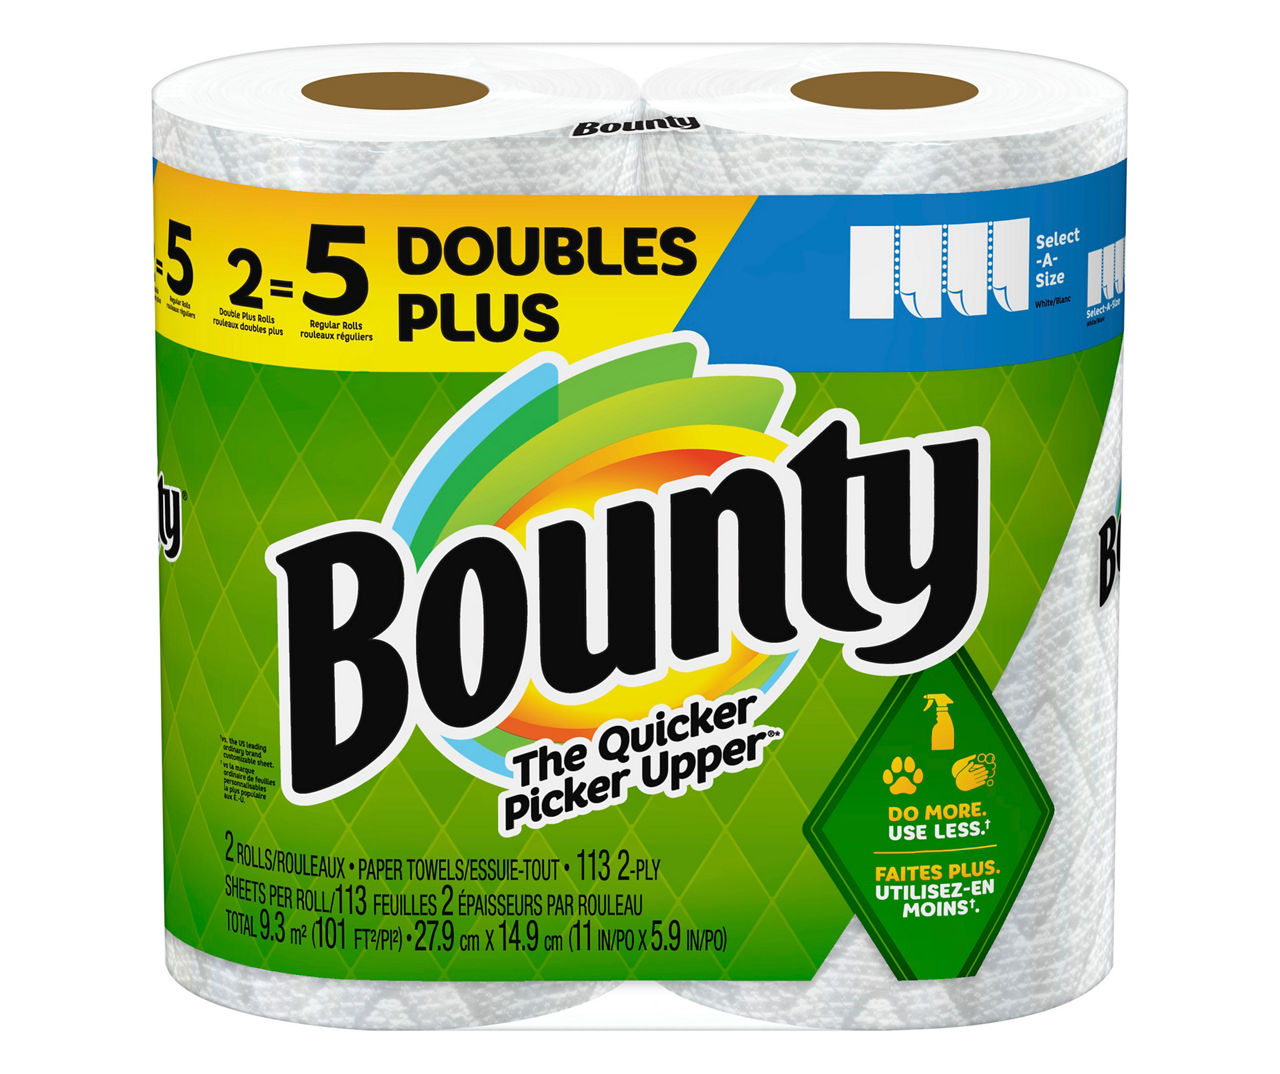 Bounty Select-A-Size Double Plus Rolls Paper Towels, 2 rolls - Kroger